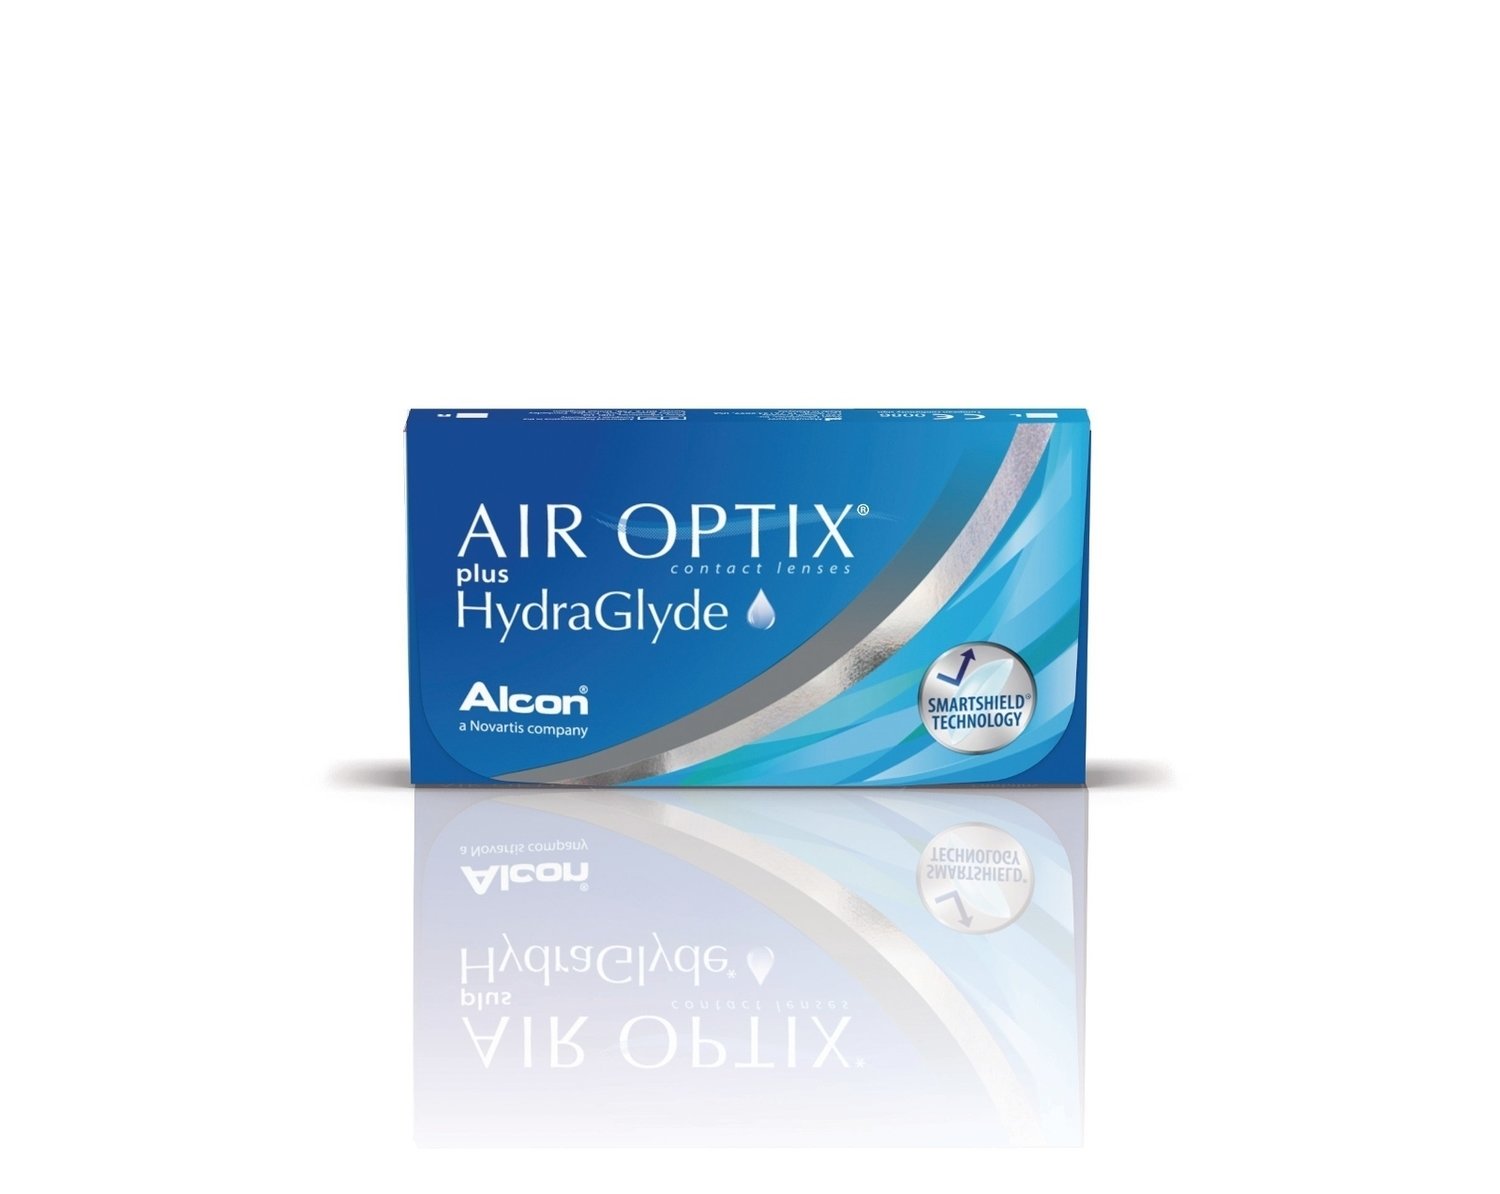 ALCON Air Optix plus HydraGlyde